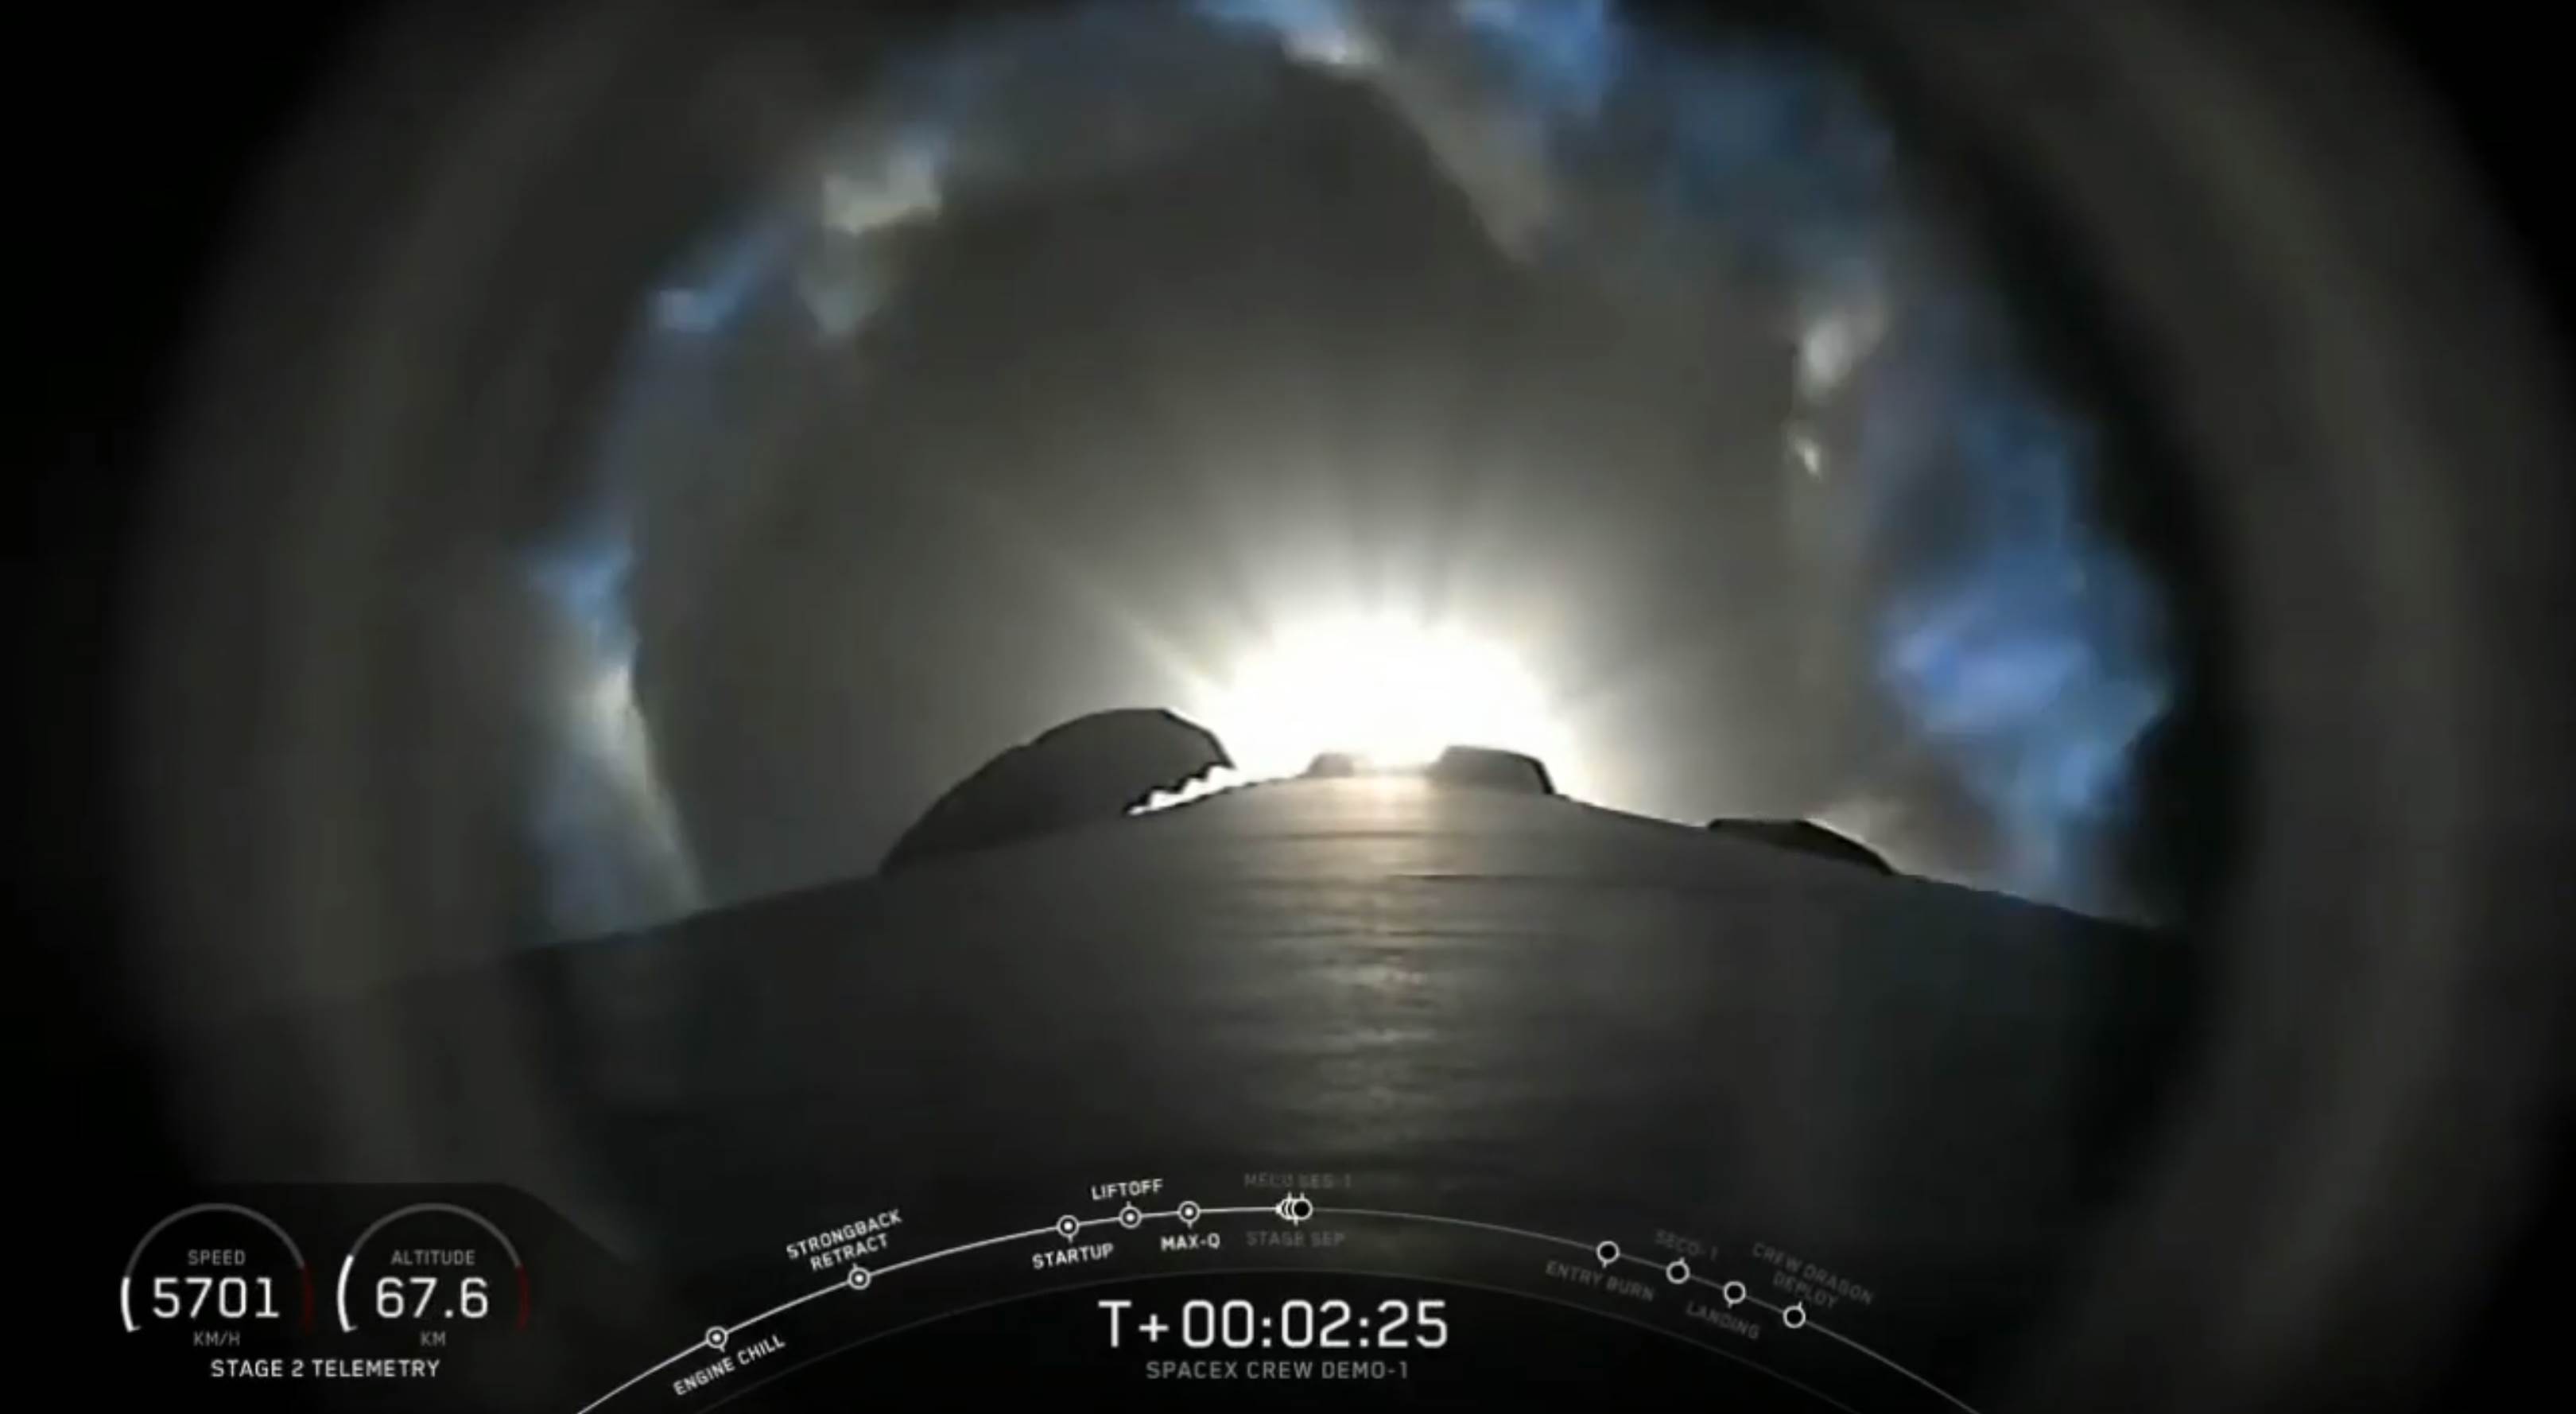 DM-1 Crew Dragon Falcon 9 B1051 launch (SpaceX) webcast 6